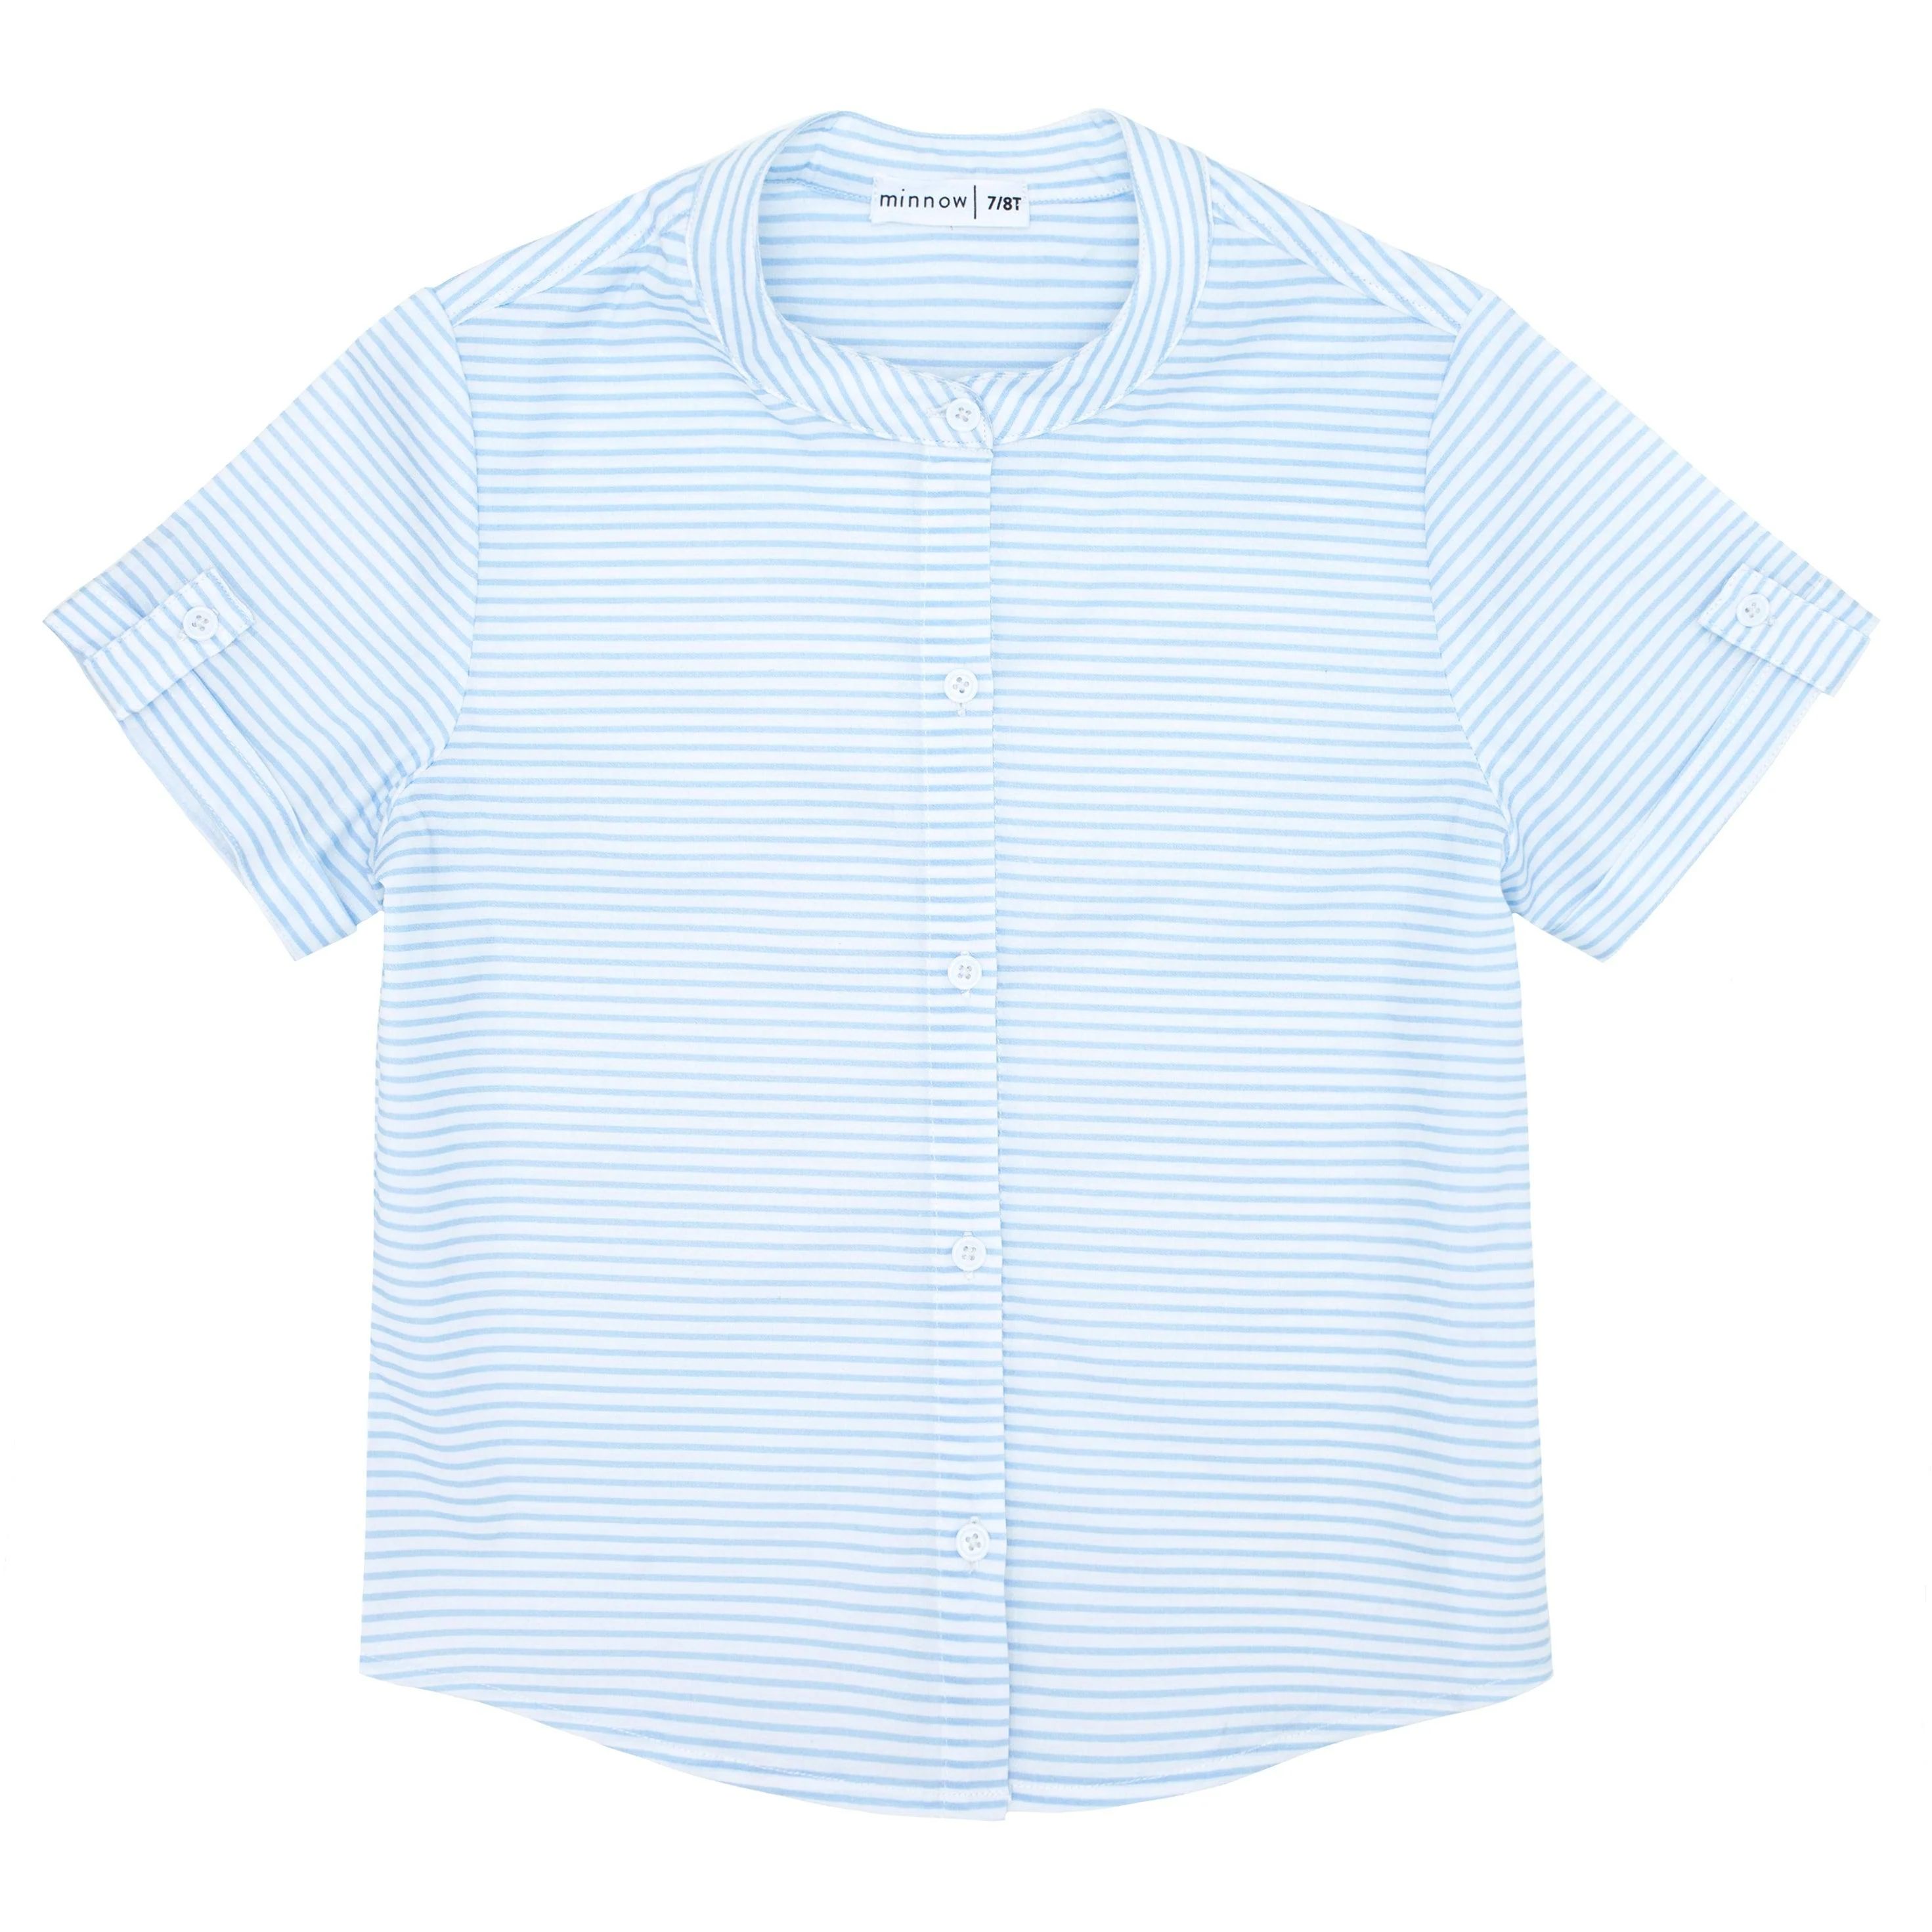 boys powder blue stripe button down shirt | minnow